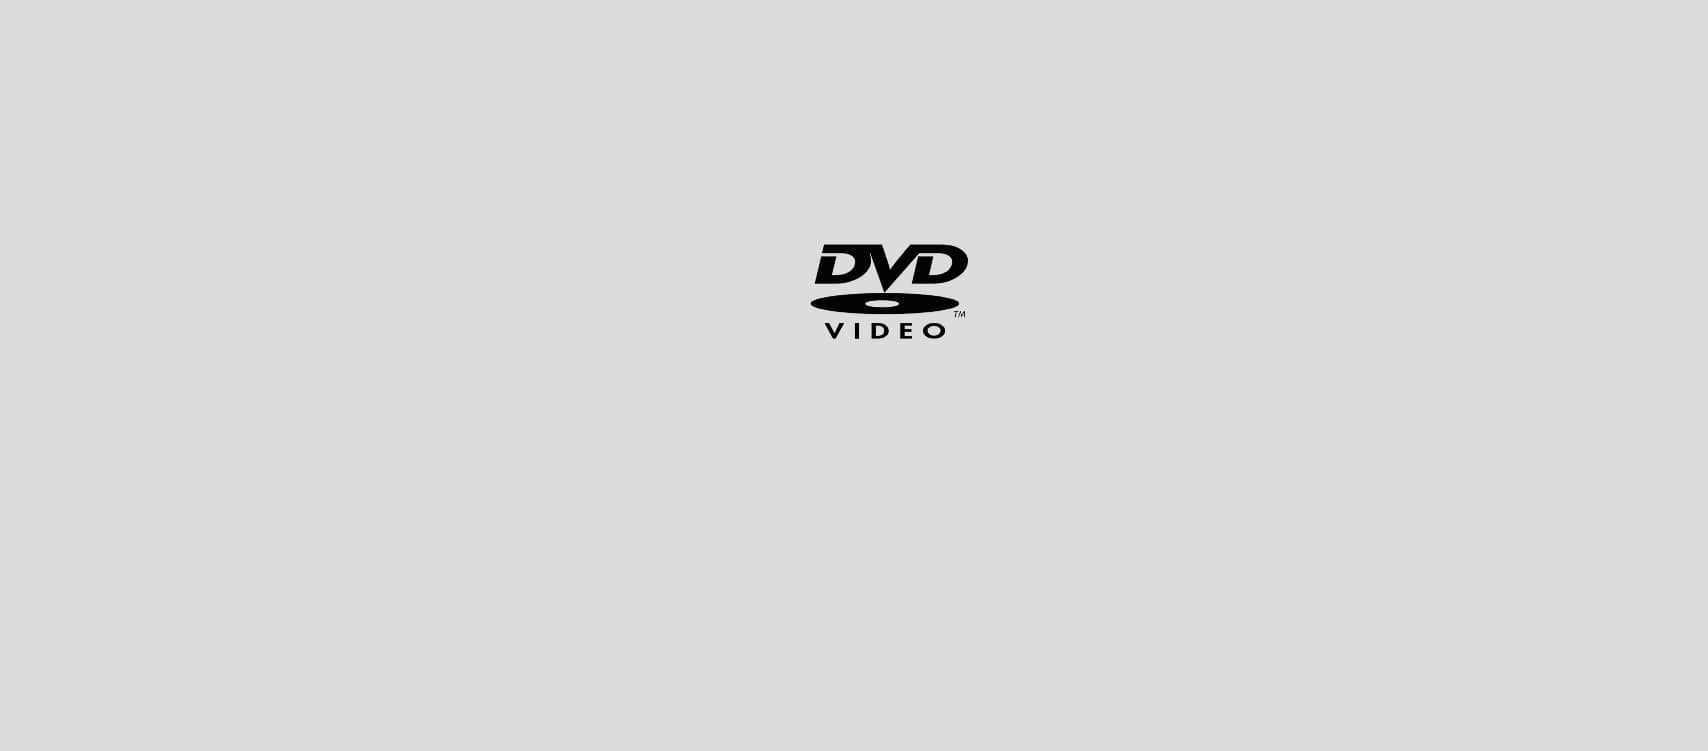 DVD Screensaver - Bouncing DVD Logo On Screen